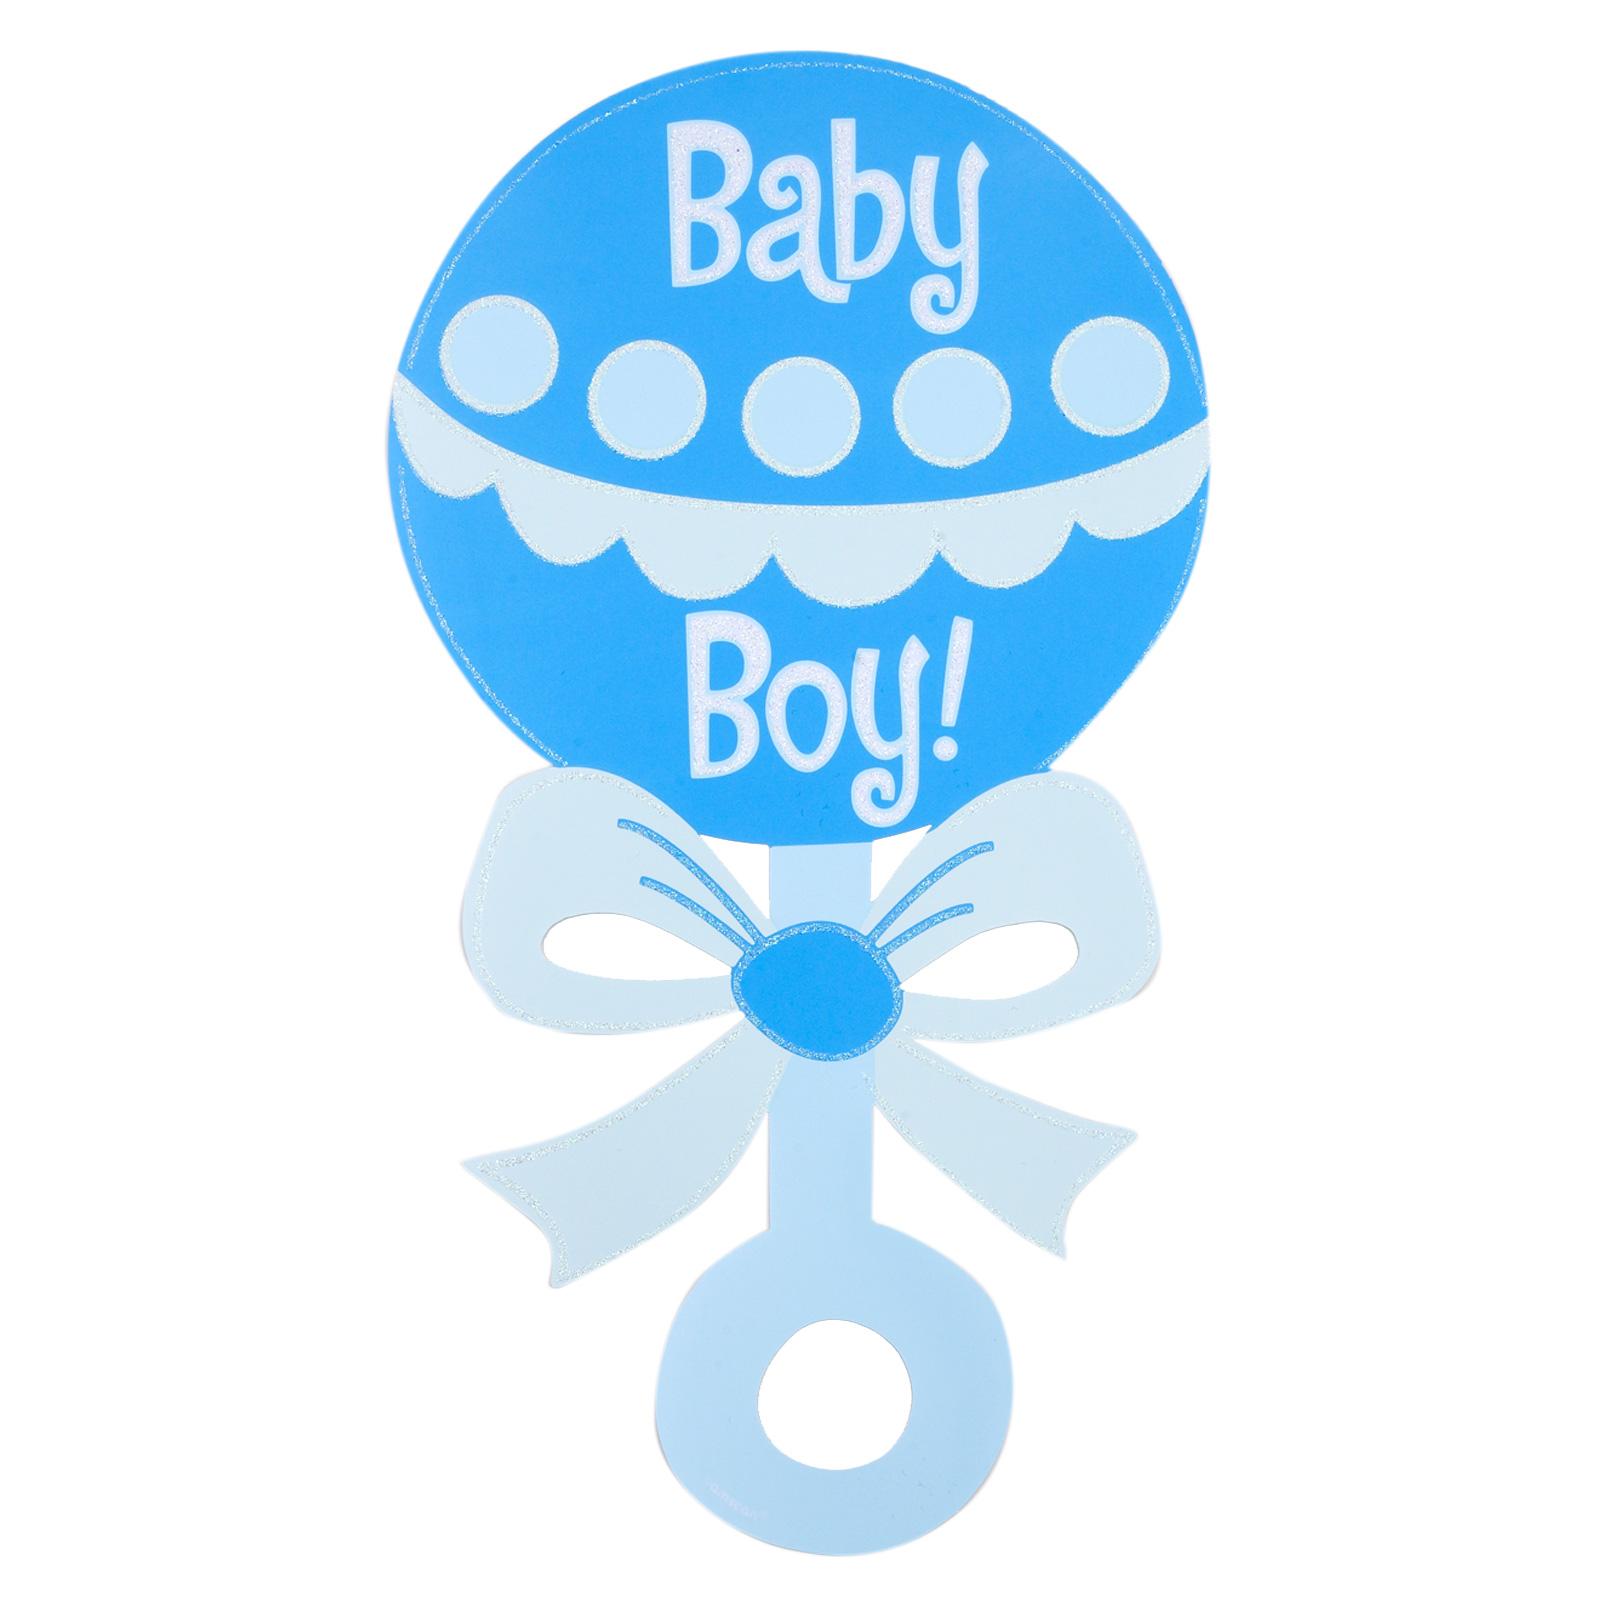 Blue baby rattle clipart - ClipartFox